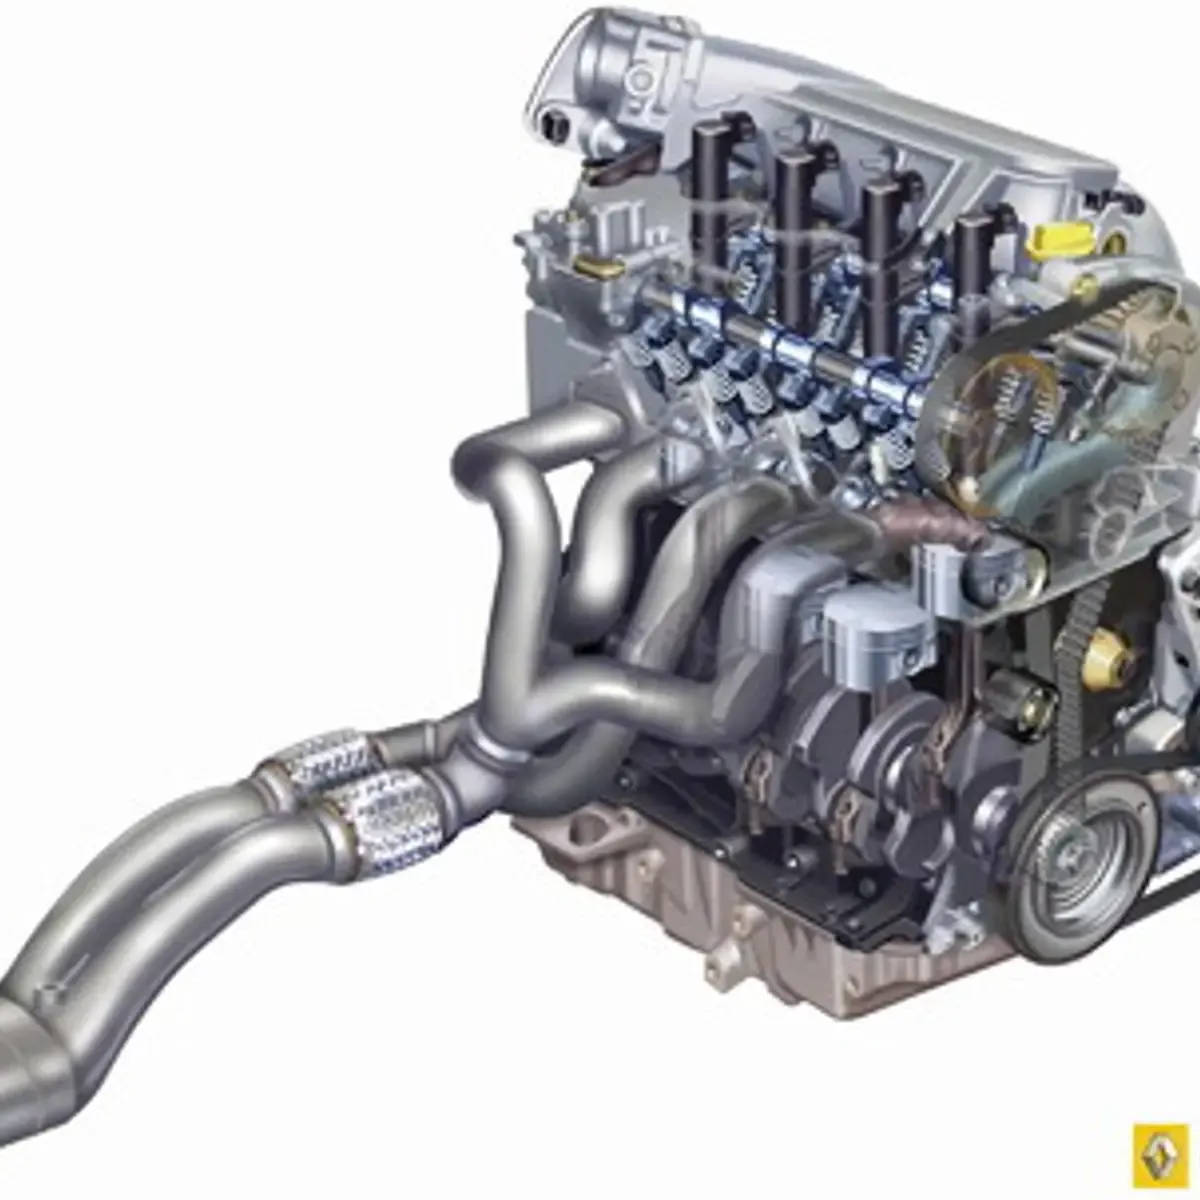 Мотор дастер 2.0. Двигатель Рено f4r 2.0. Двигатель Renault Duster 2.0 f4r. Двигатель f4r Рено Дастер. Двигатель Рено Дастер 2.0 143 л.с.